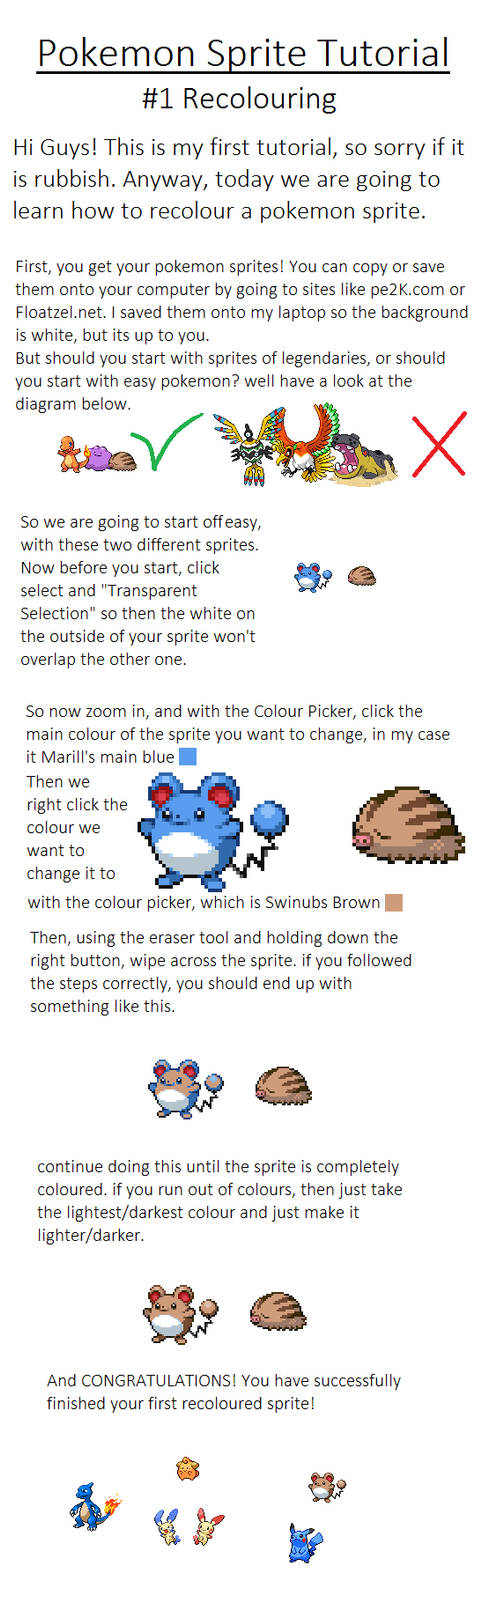 Tutorial - Recoloring Pokemon Sprites Tutorial in Easy + Quick